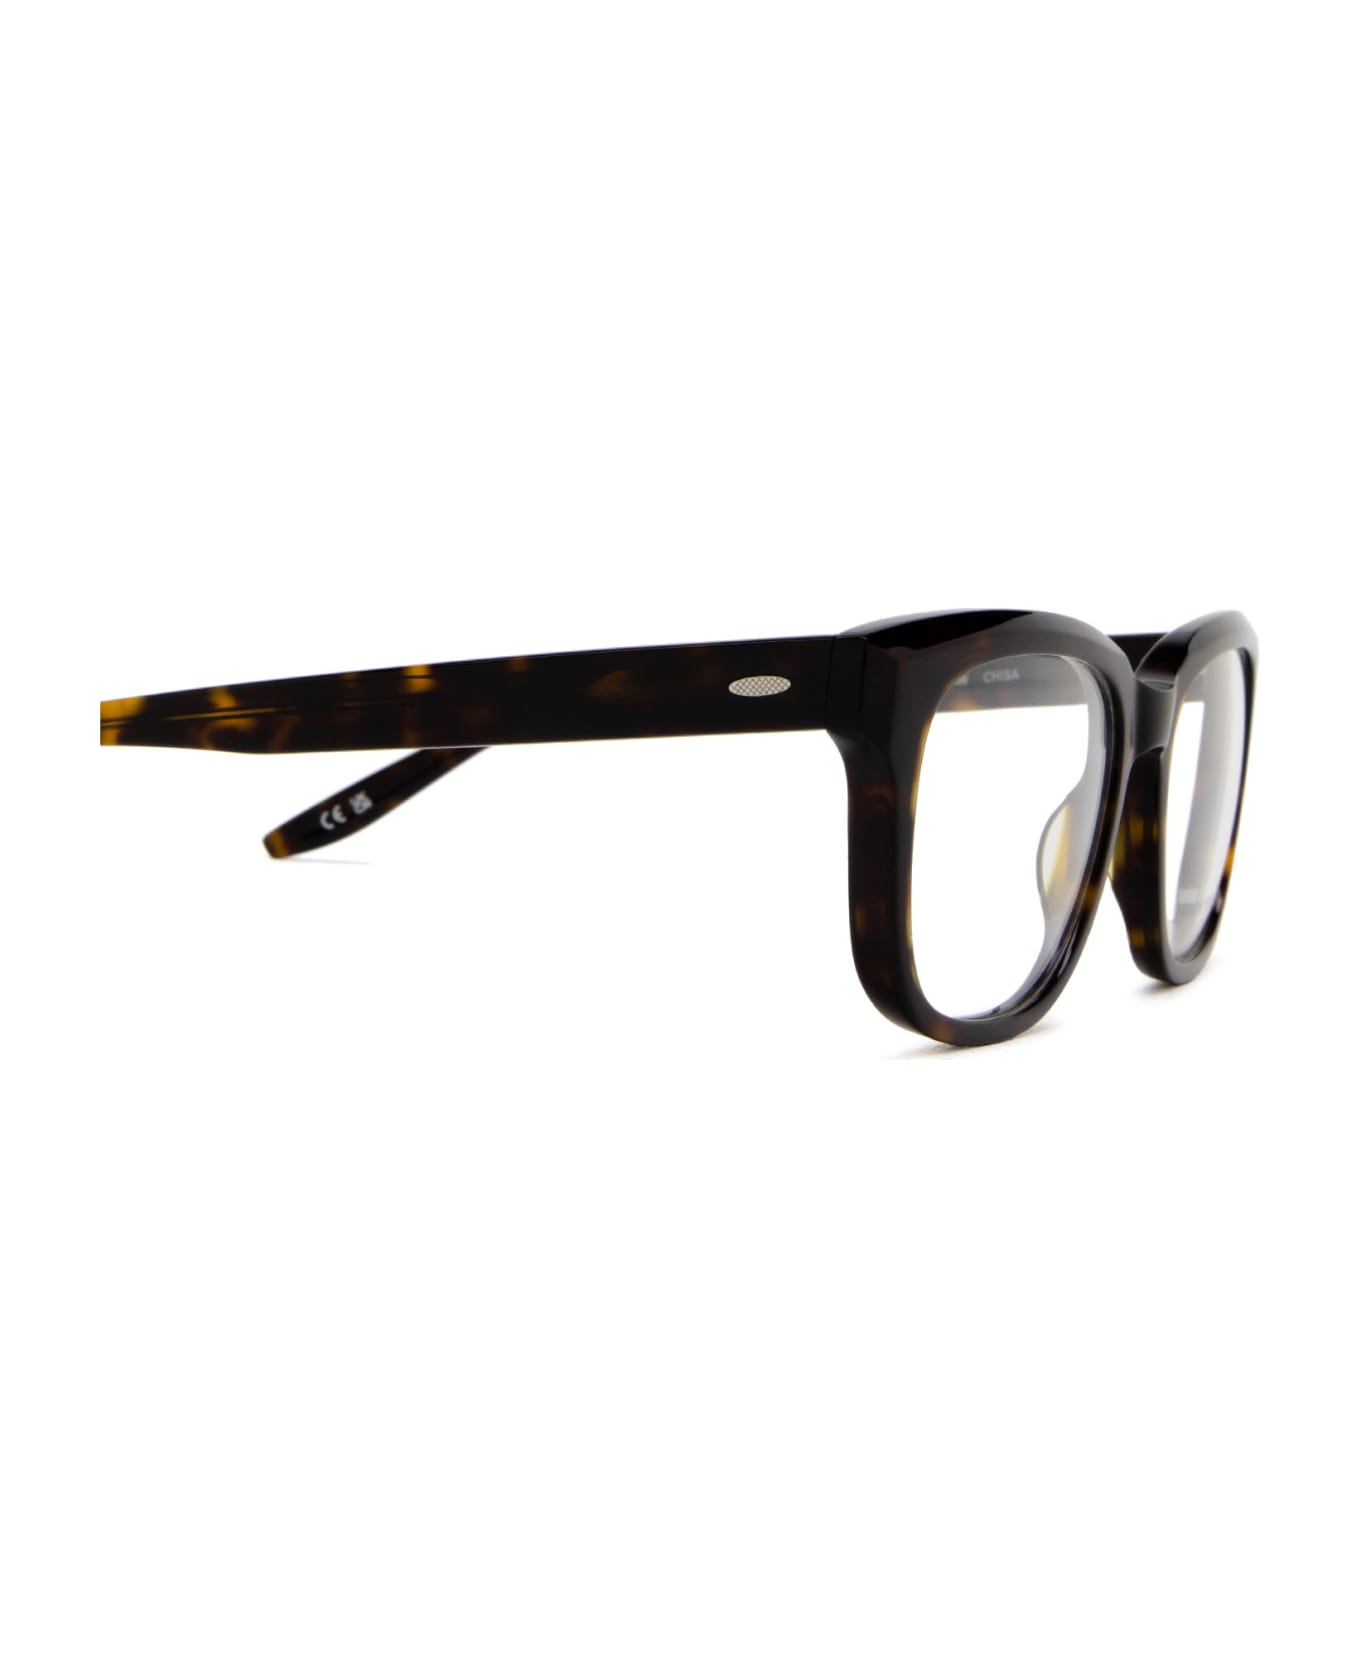 Barton Perreira Bp5280 Daw Glasses - DAW アイウェア